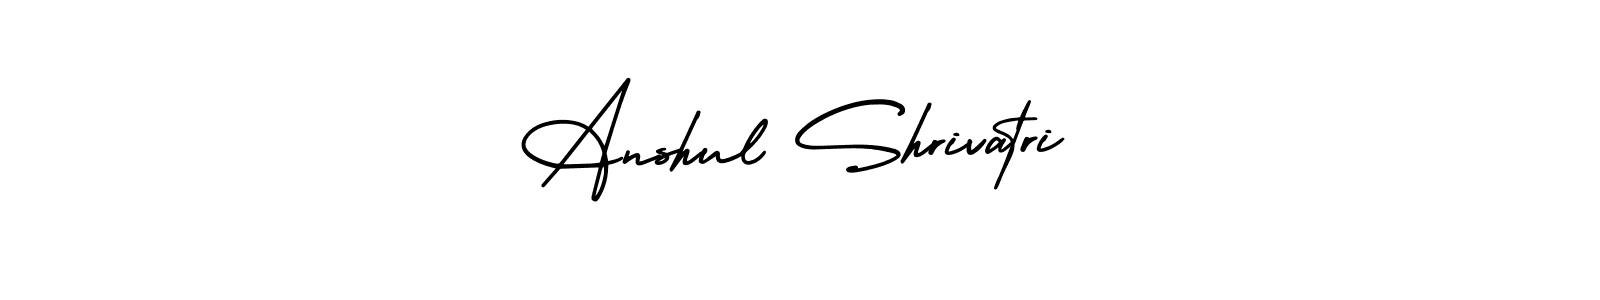 How to Draw Anshul Shrivatri signature style? AmerikaSignatureDemo-Regular is a latest design signature styles for name Anshul Shrivatri. Anshul Shrivatri signature style 3 images and pictures png